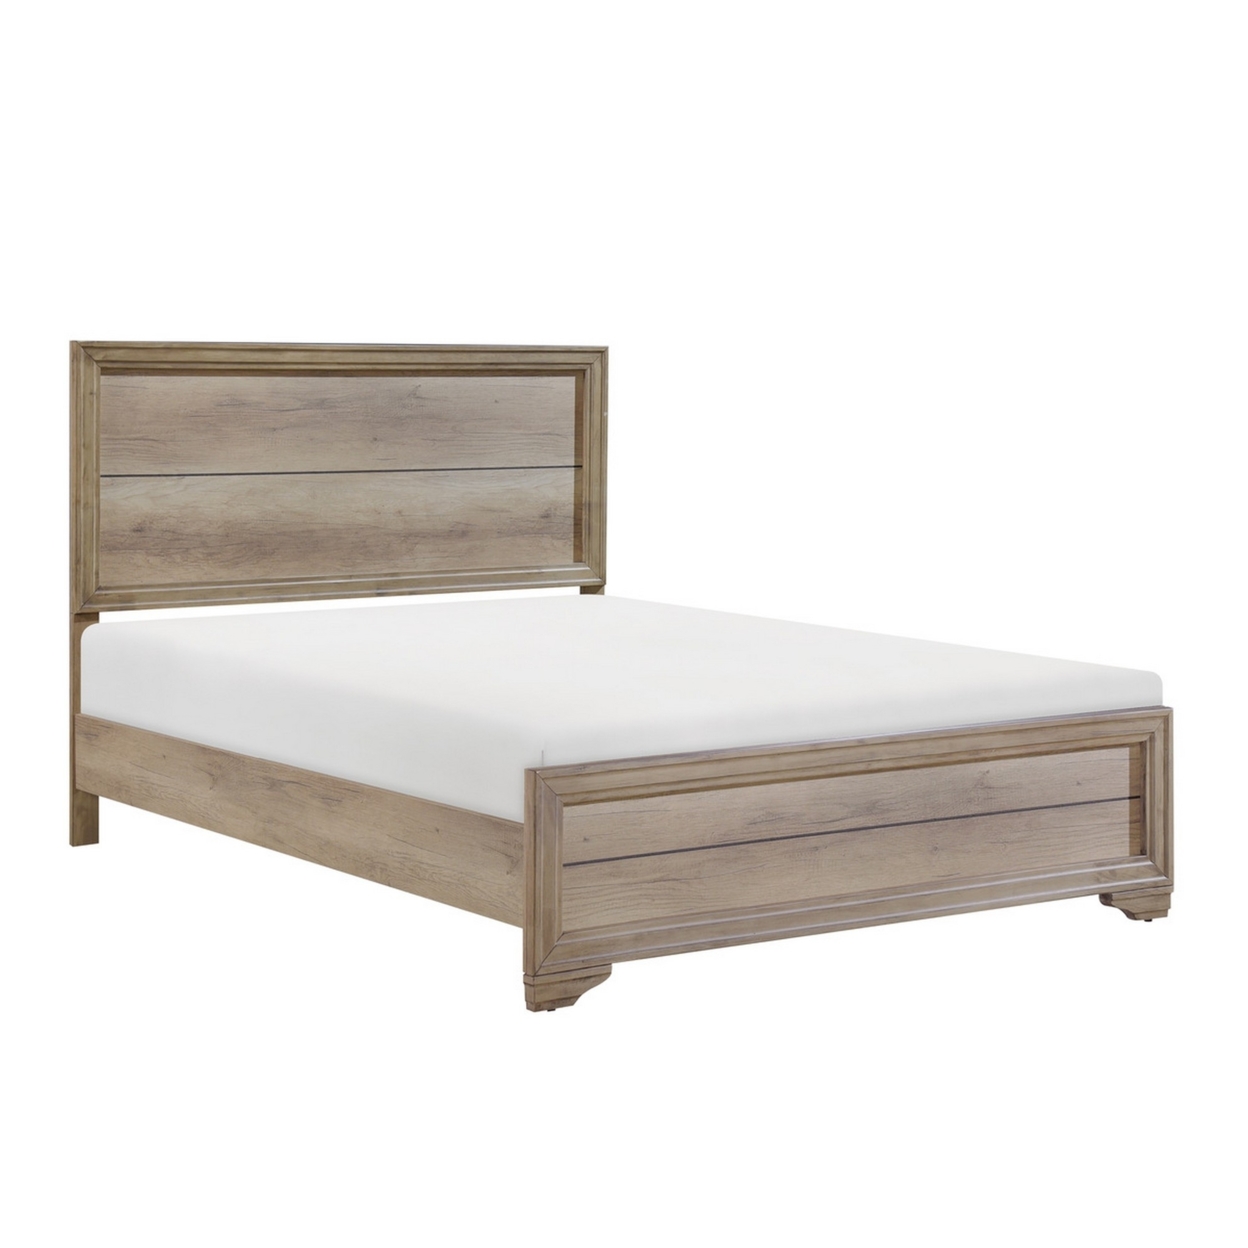 Contemporary Queen Bed, Rustic Wood Panel Headboard, Natural Brown Finish- Saltoro Sherpi